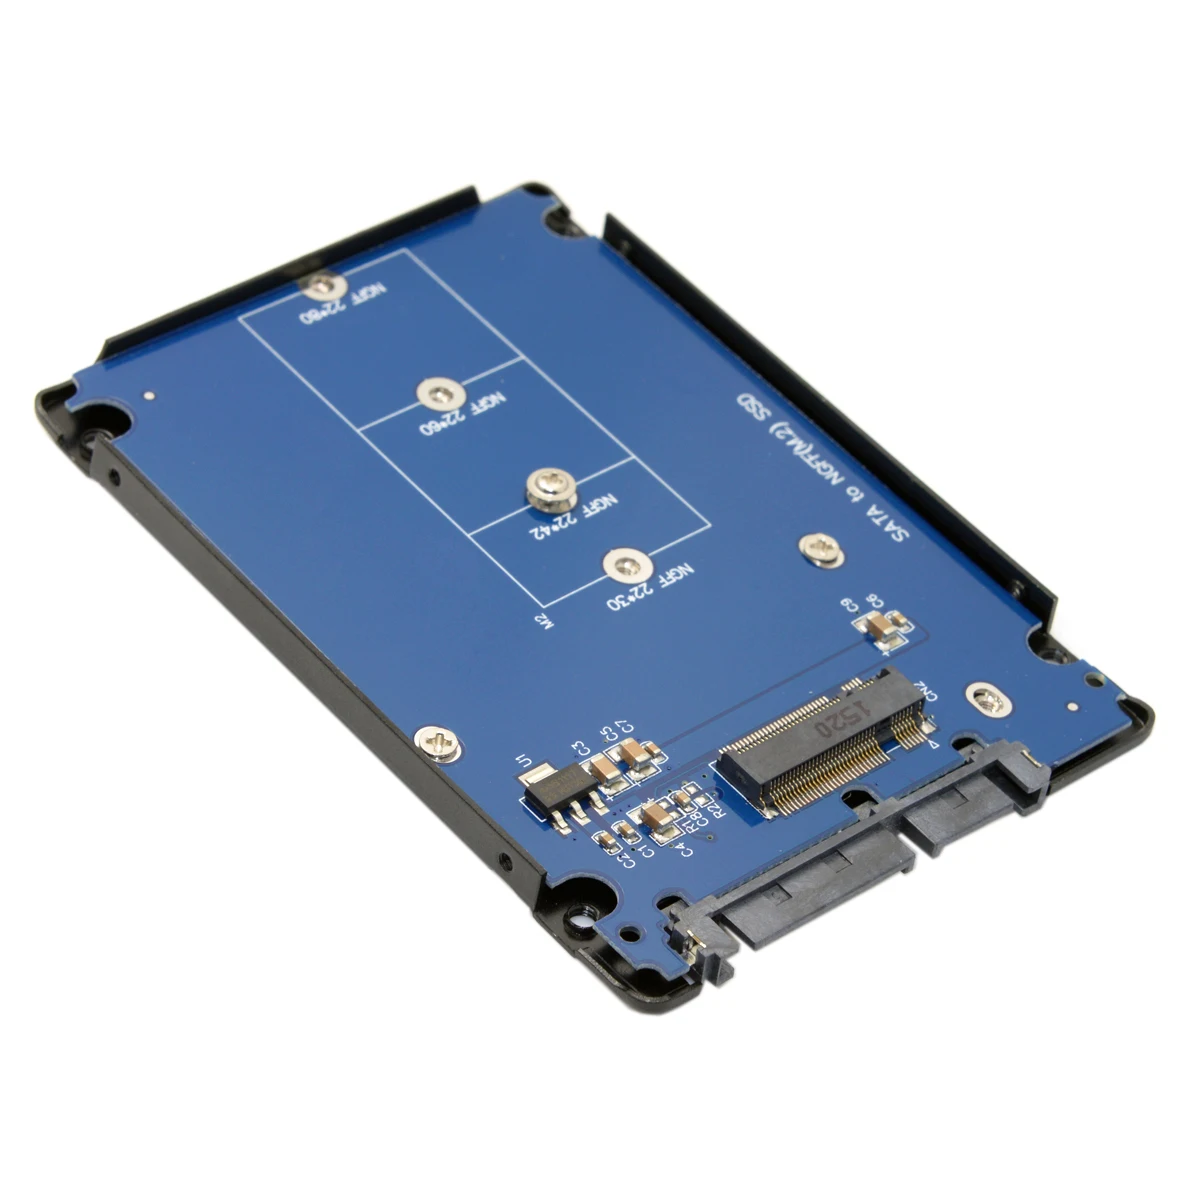 

Jimier CY B+M Key Socket 2 M.2 NGFF (SATA) SSD to 2.5 SATA Adapter Card Adapter with Black Metal Case